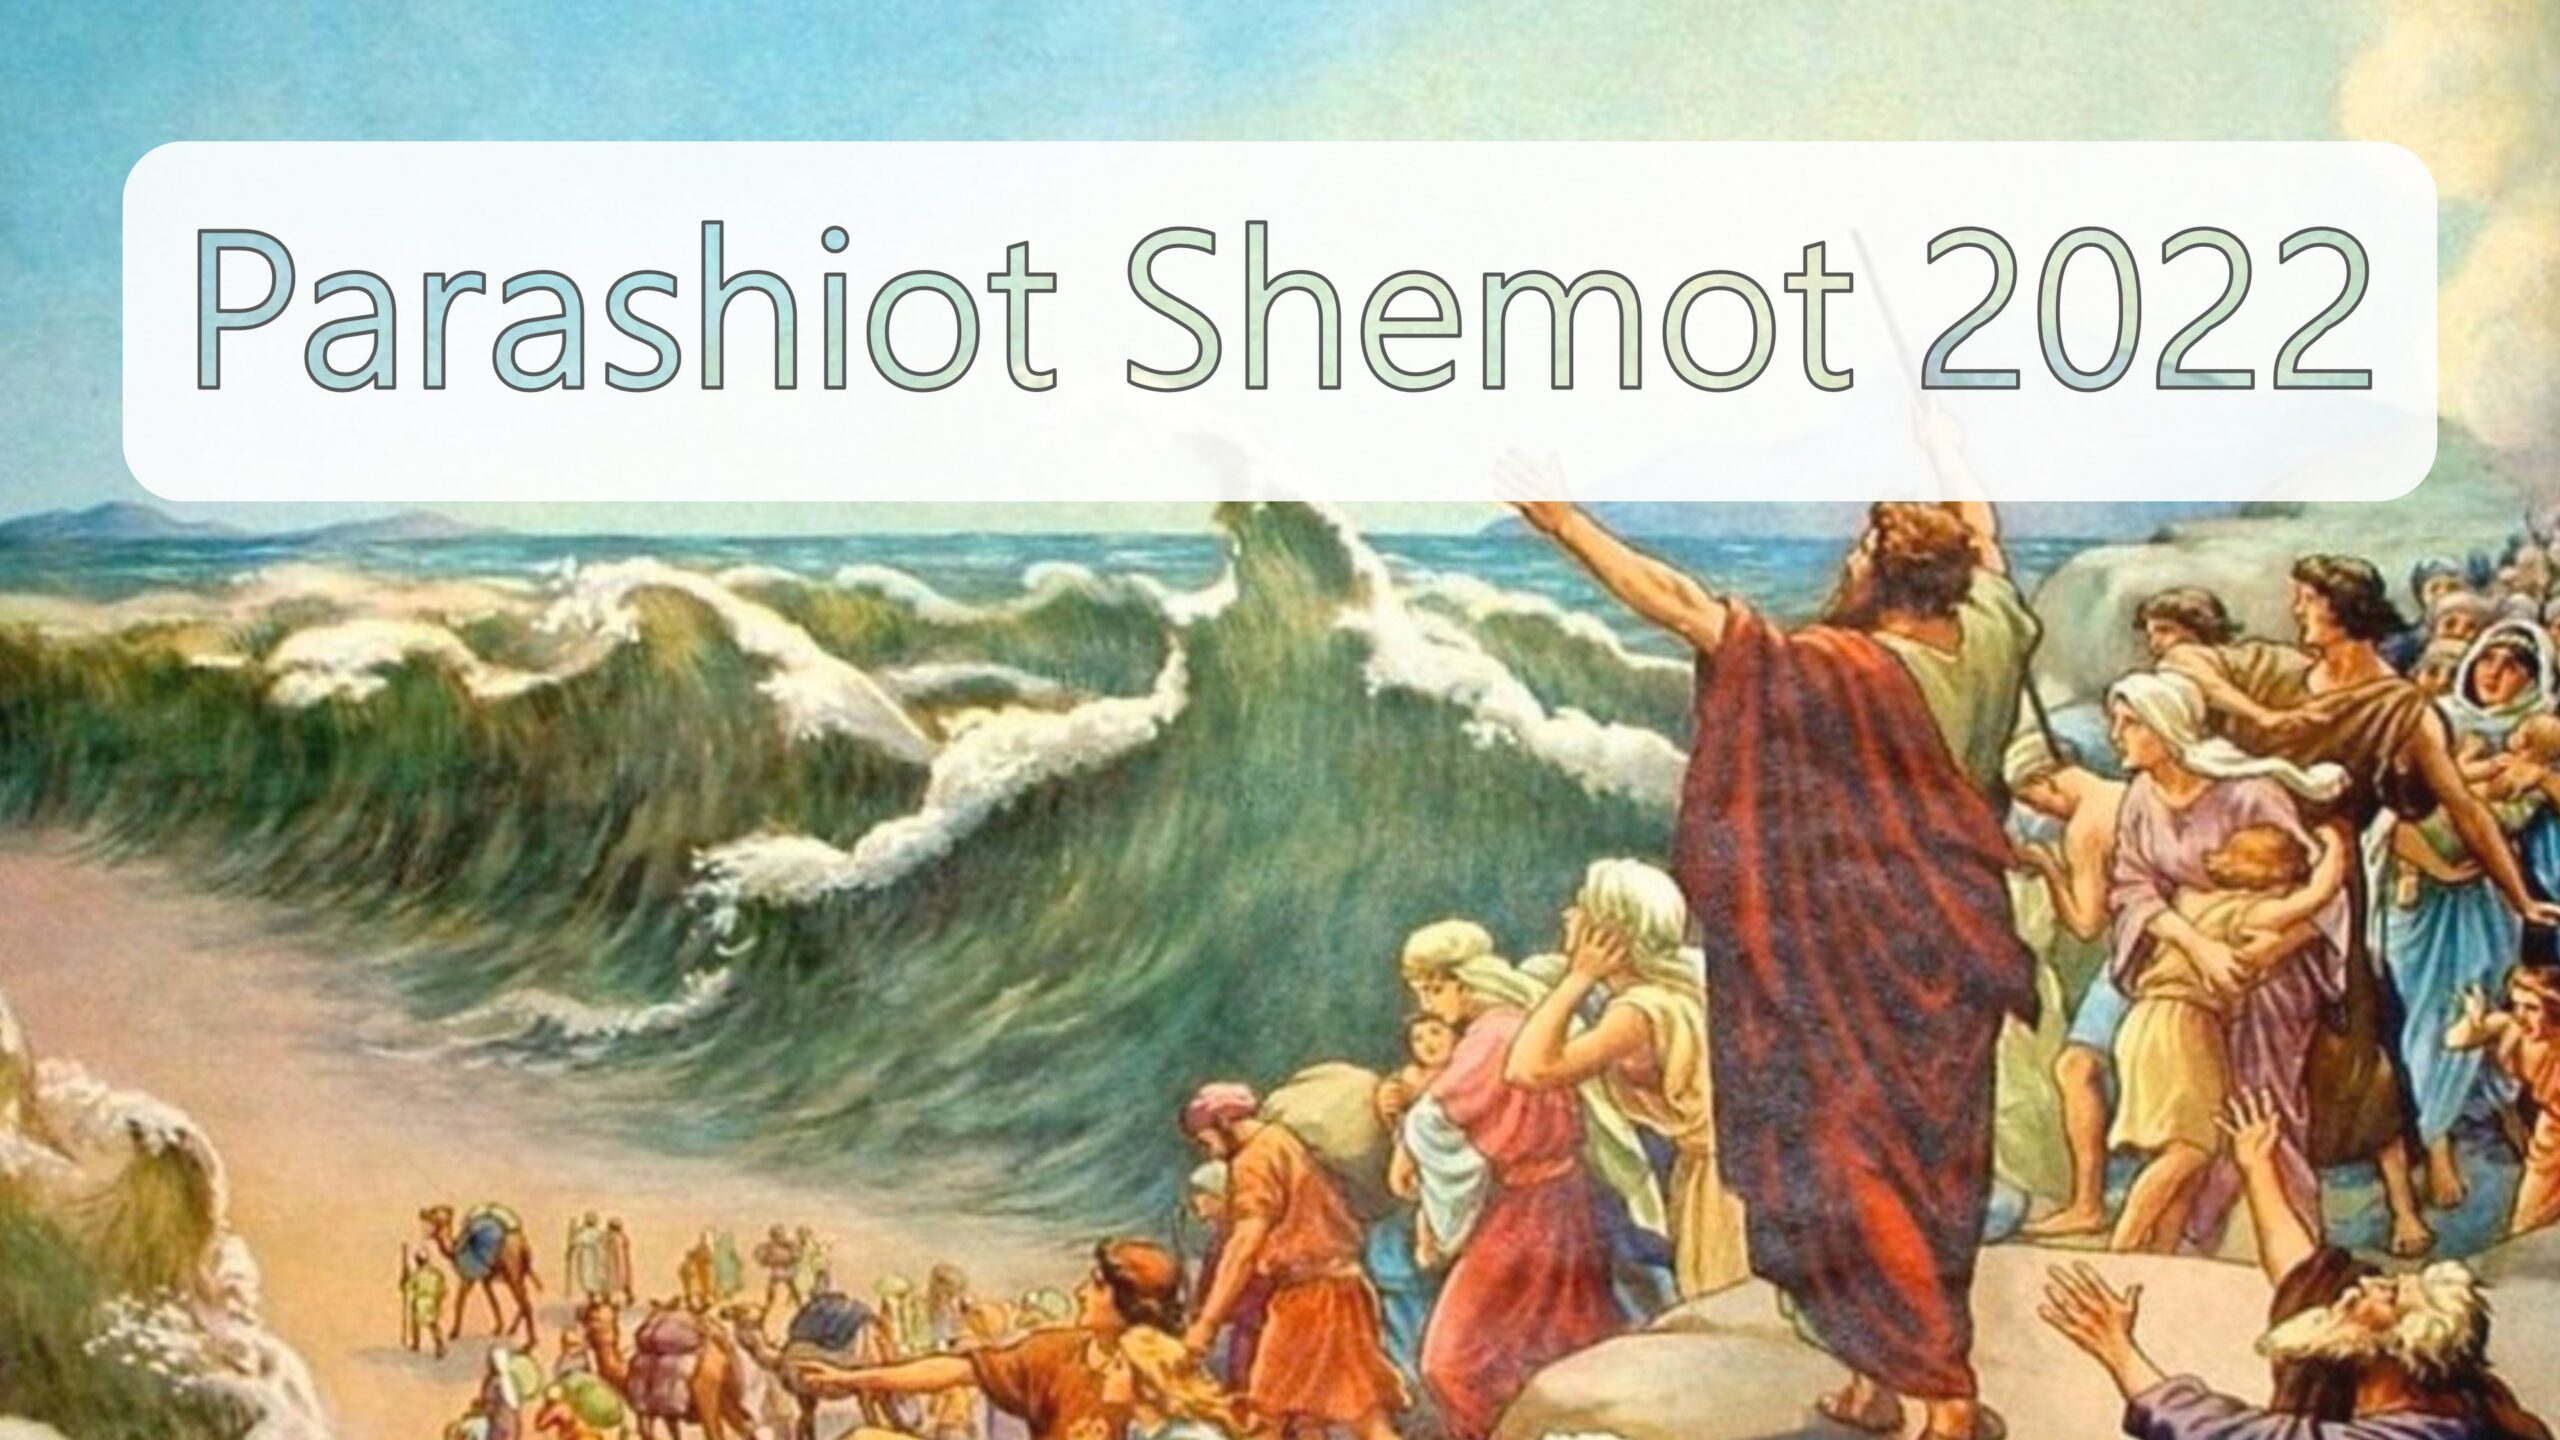 Parashiot Shemote 2022